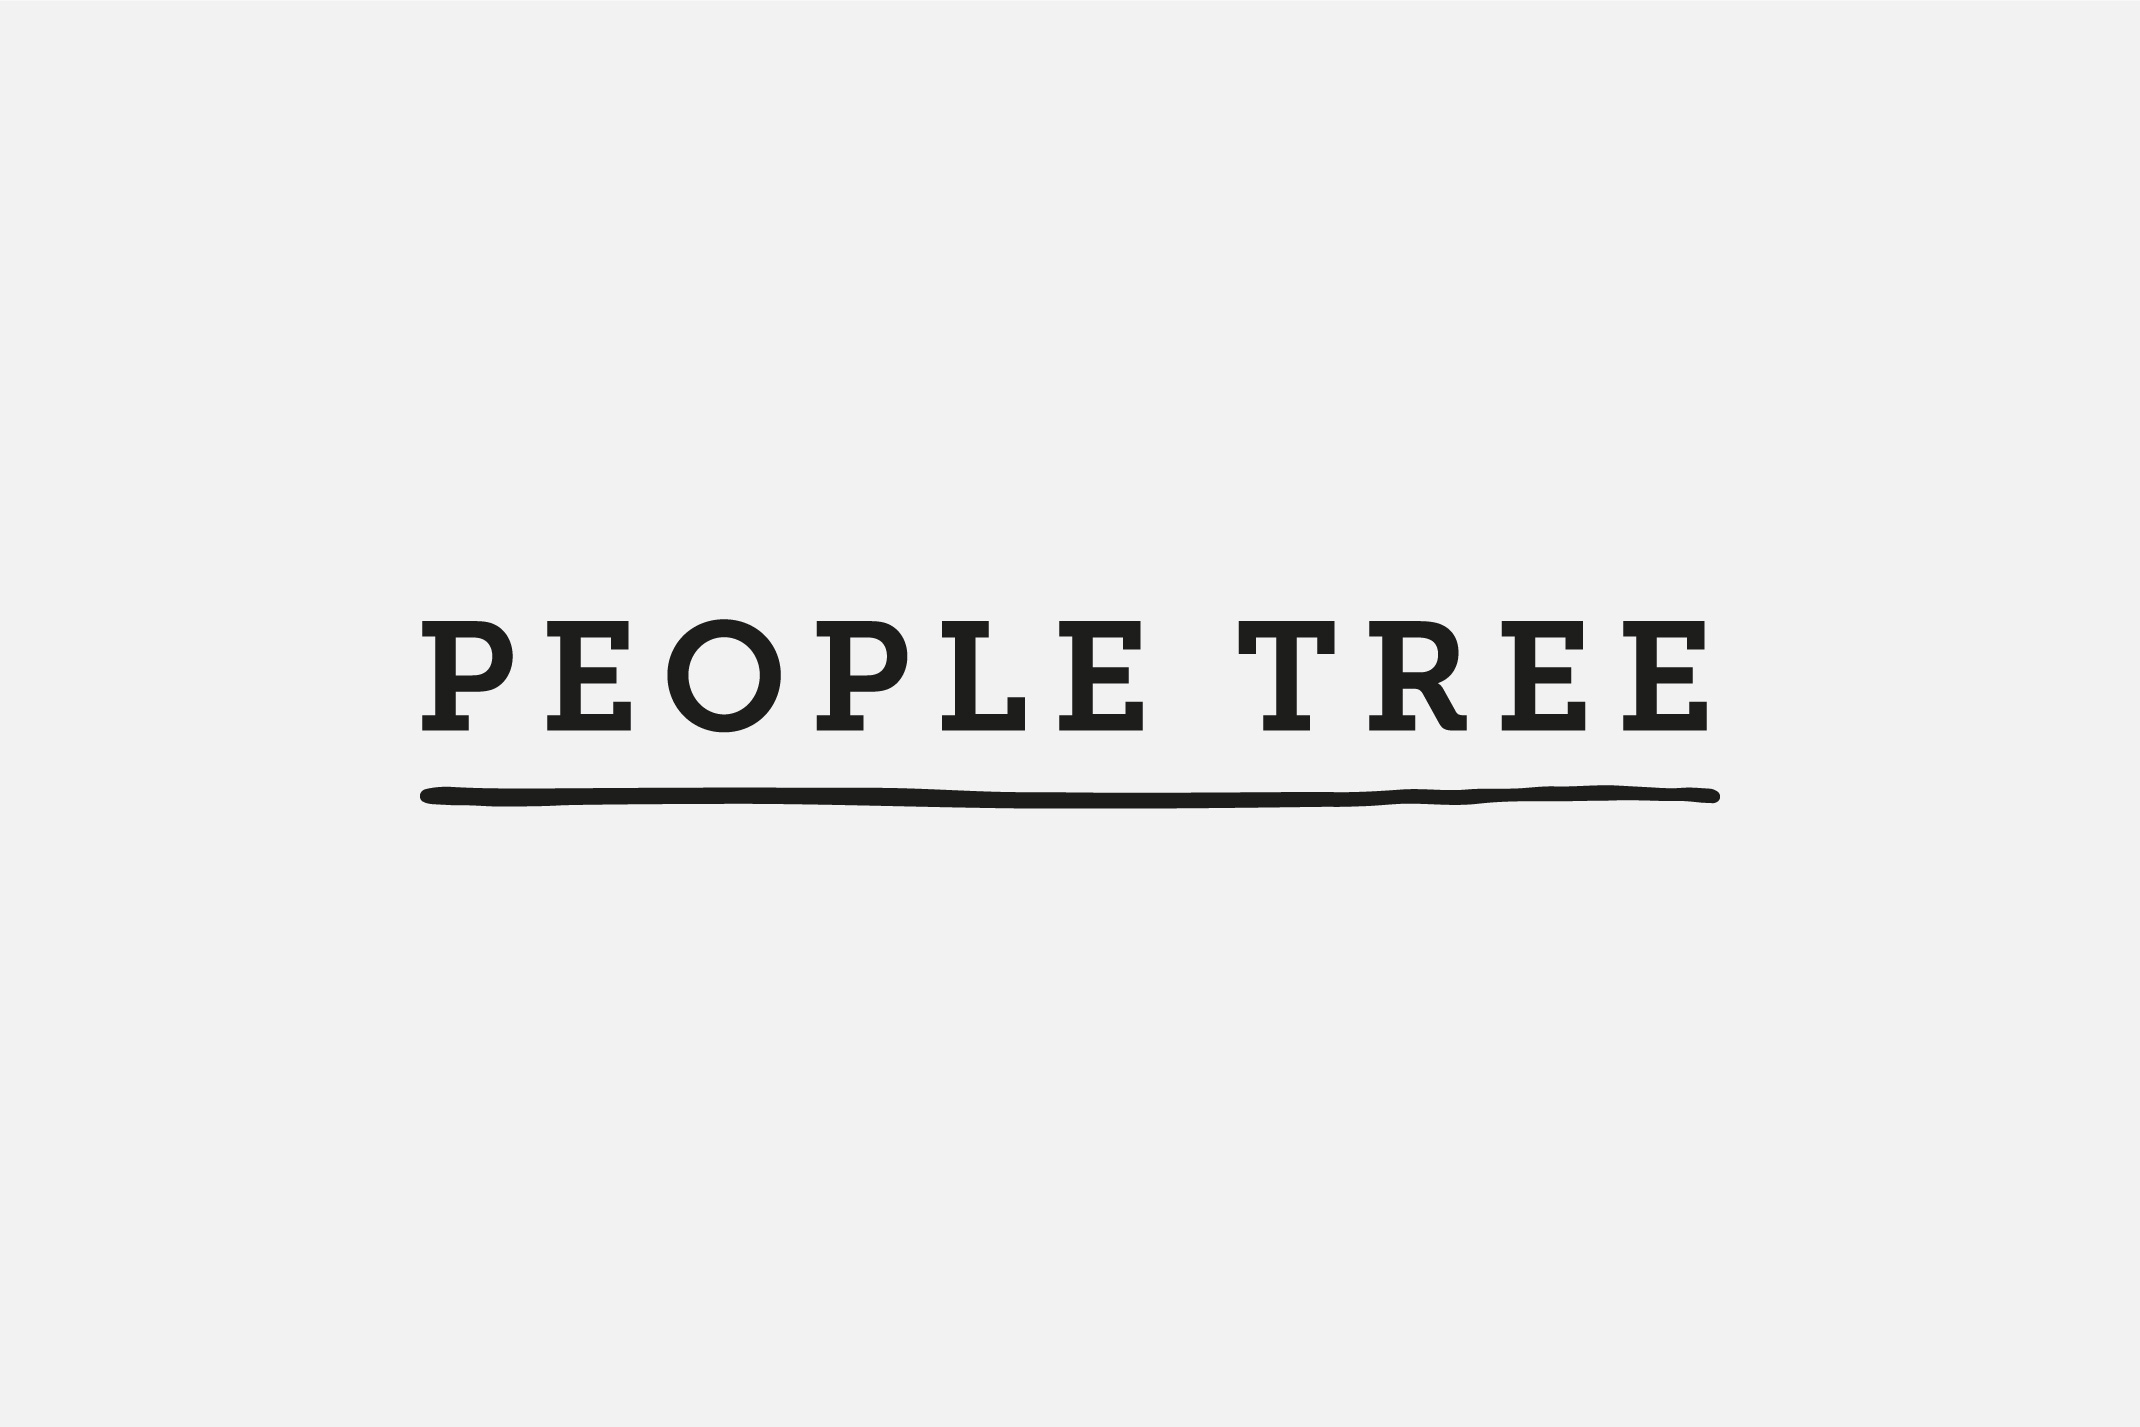 People Tree – Charlie Smith Design